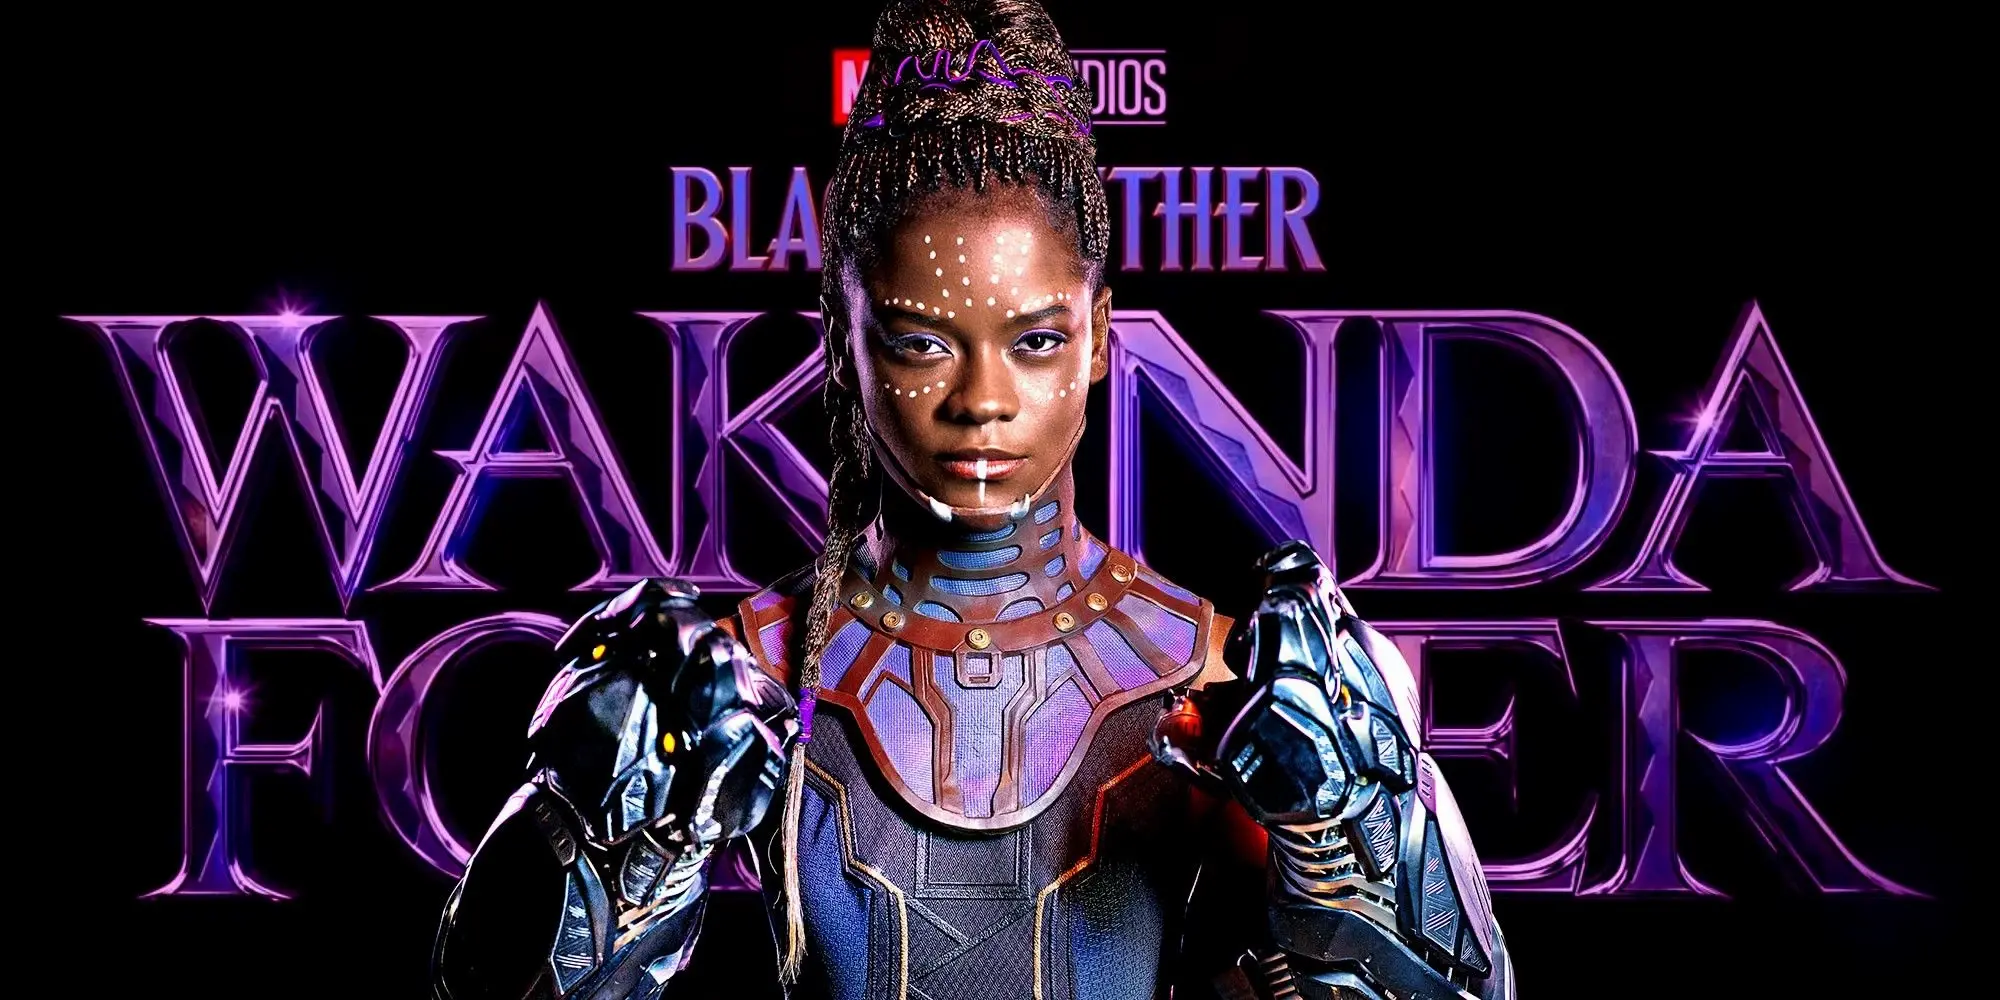 Black Panther- Wakanda Forever